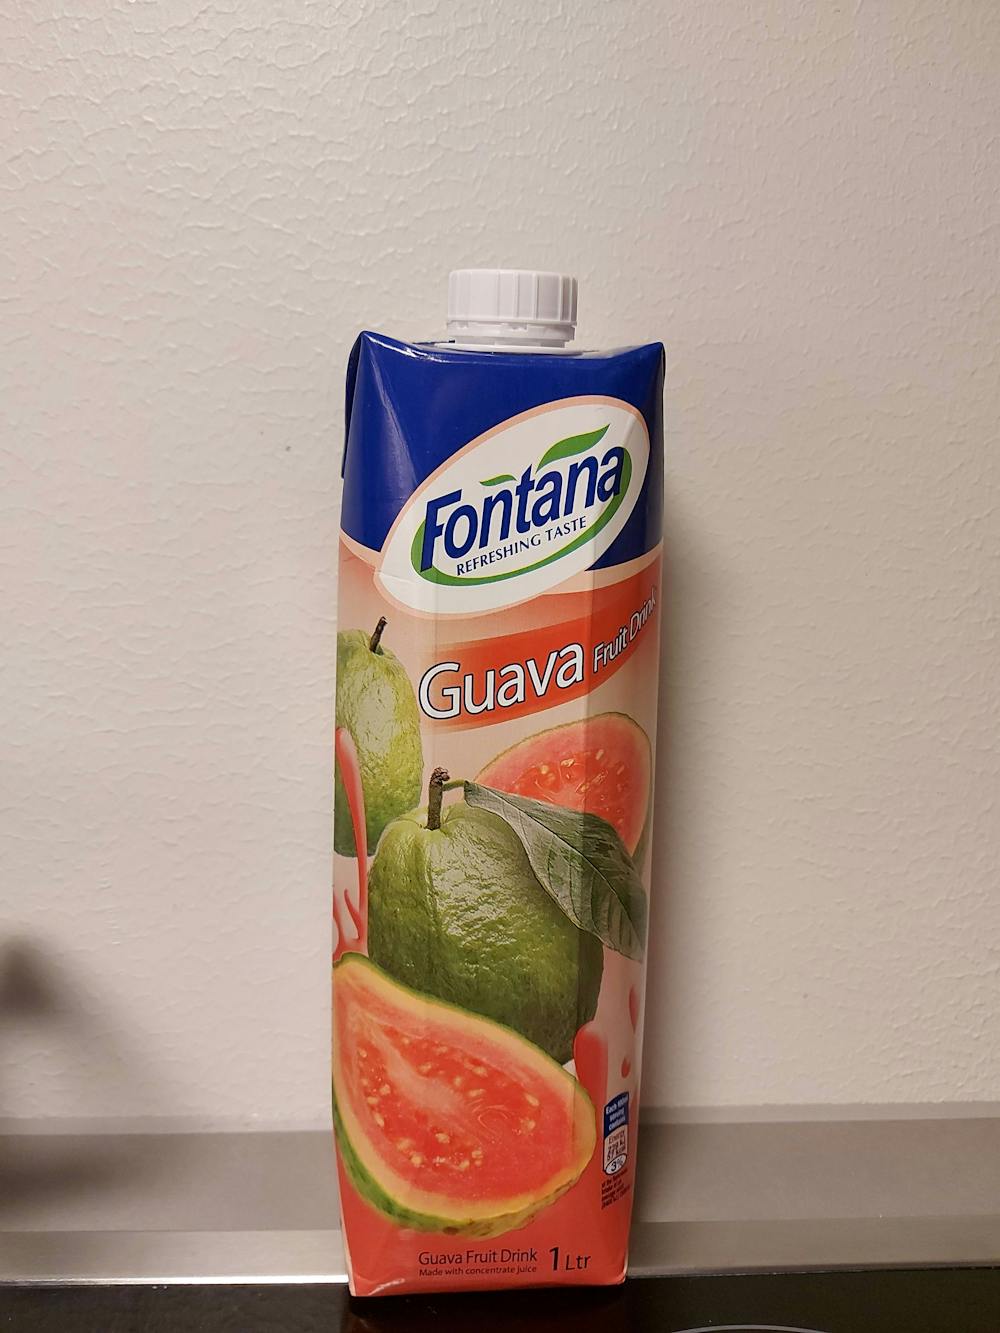 Guava fruit drink, Fontana